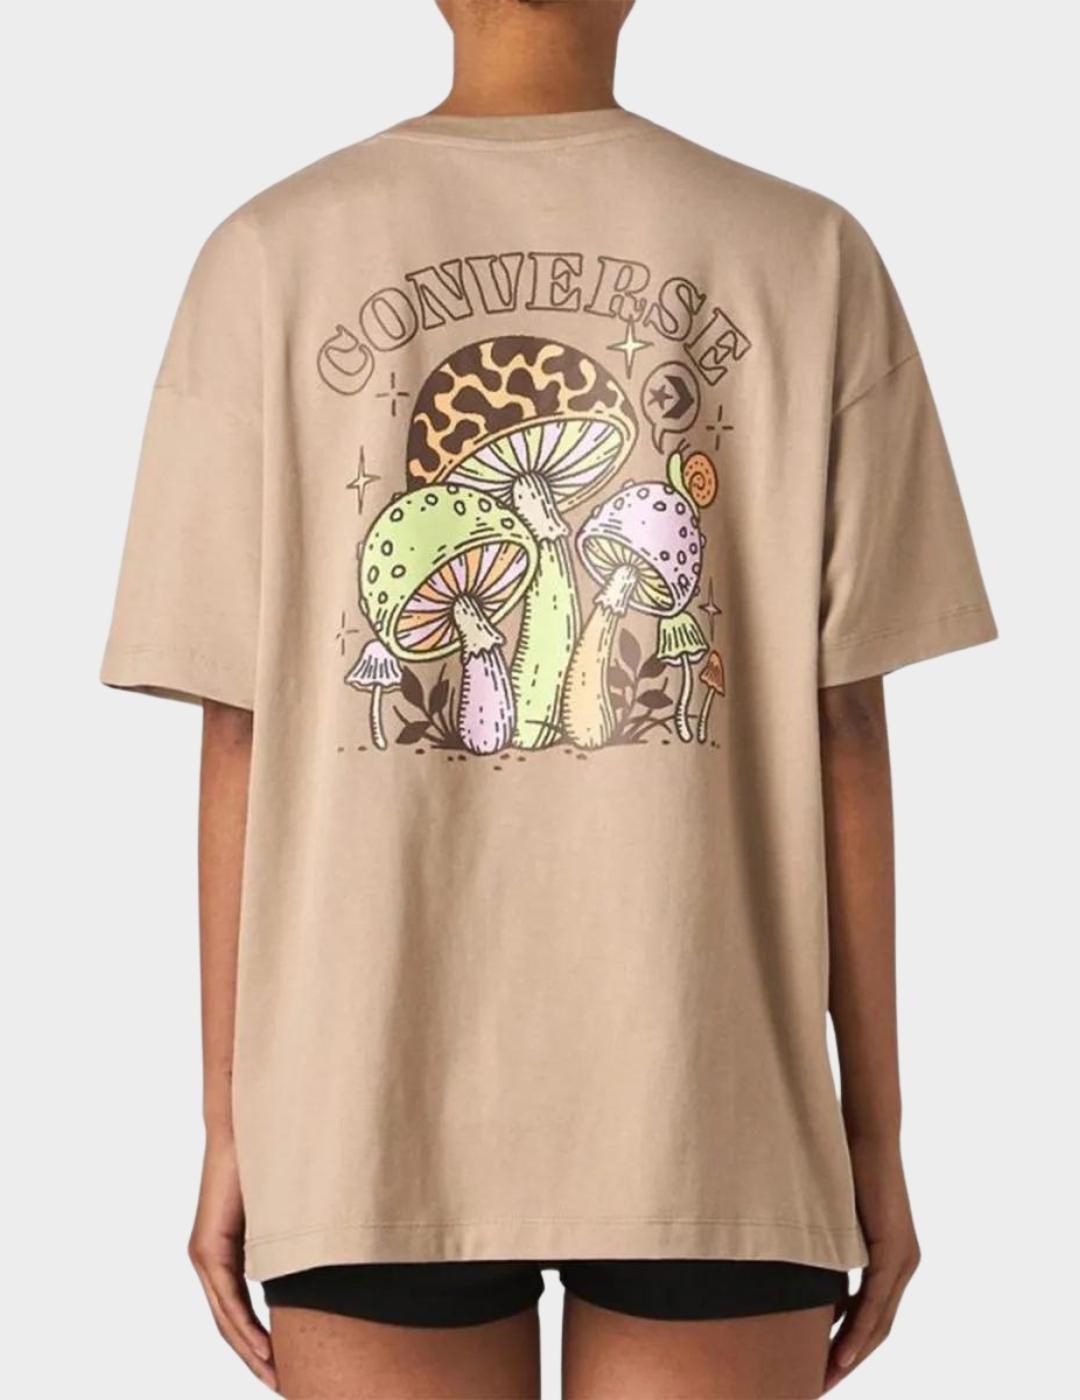 Camiseta Converse mushroom unisex